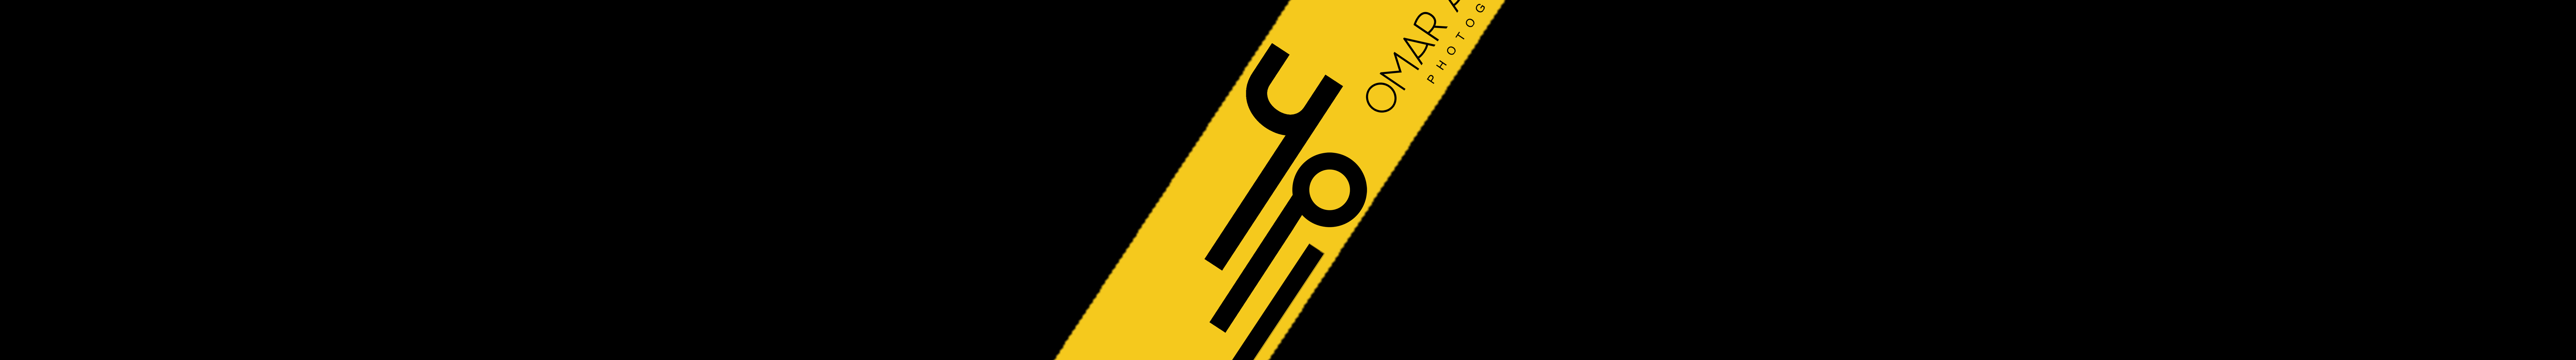 Omar AlTabbaa's profile banner